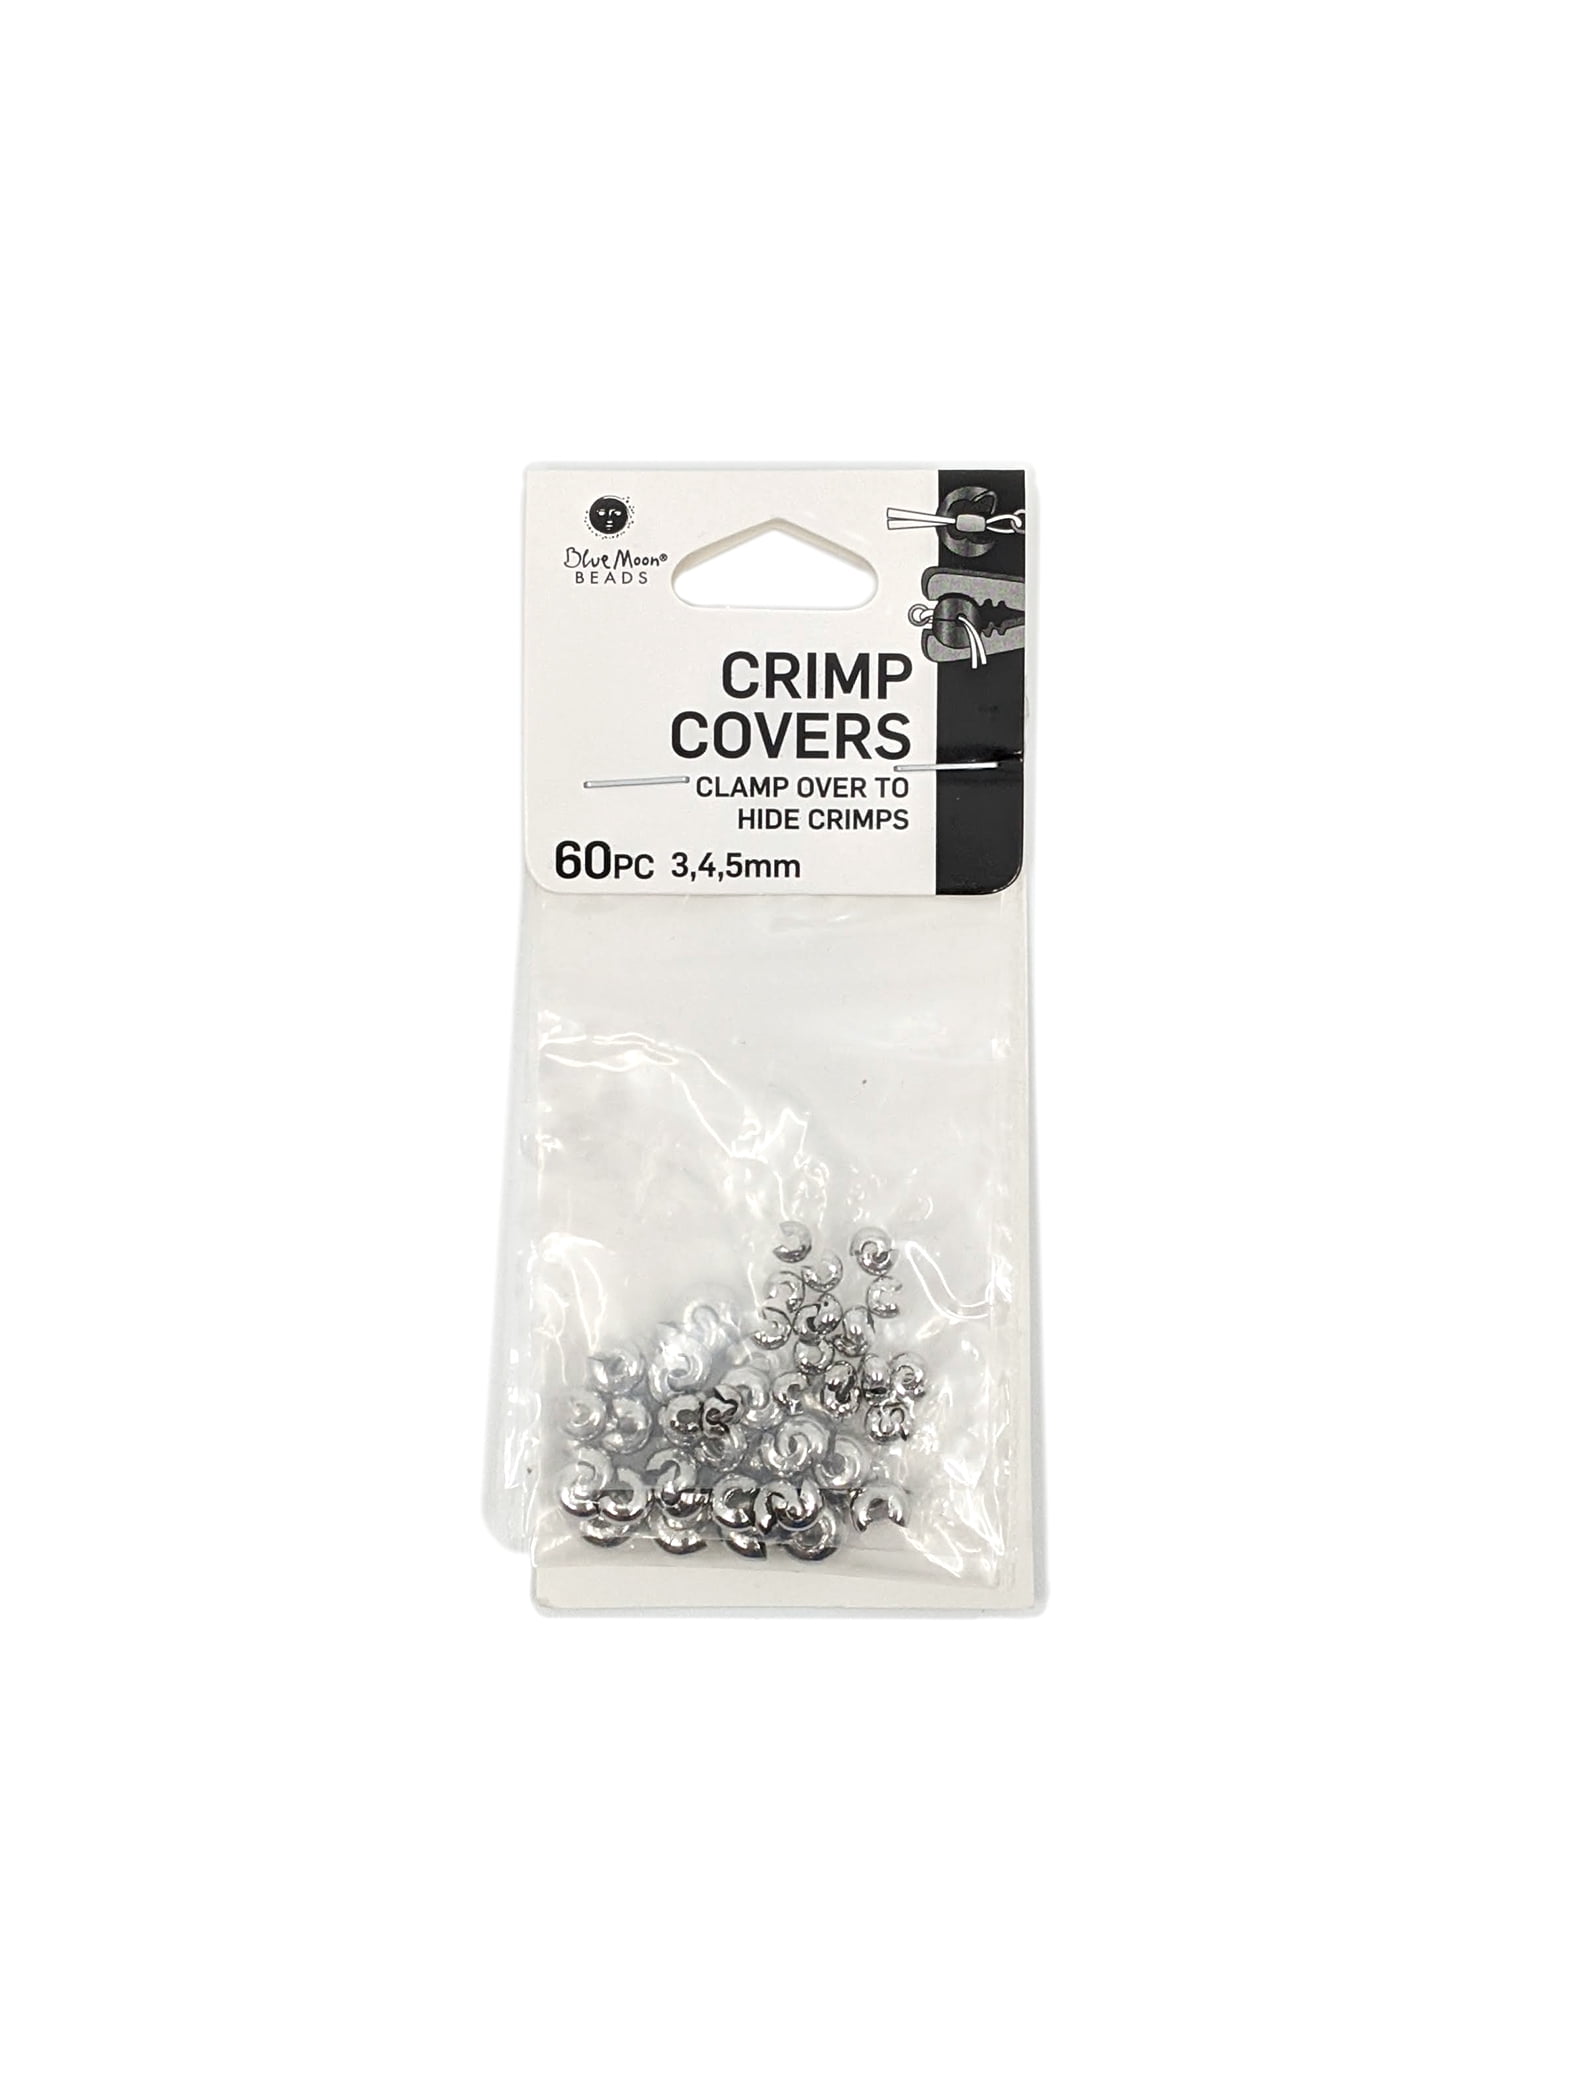 20 Pcs Bag of 2.5 mm Silver Crimp Covers